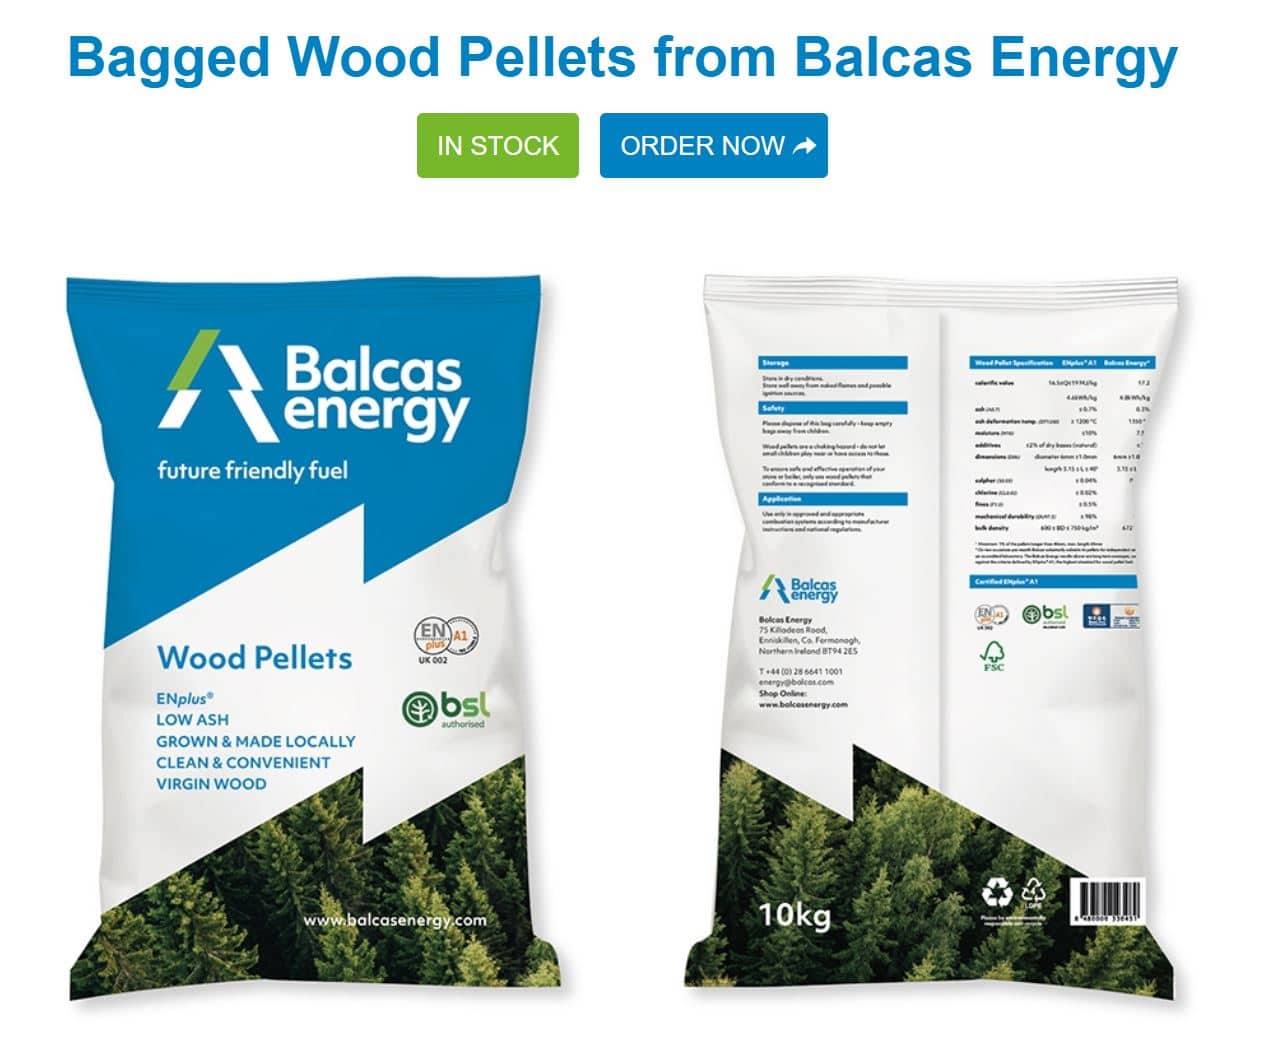 online ordering for bagged wood pellets